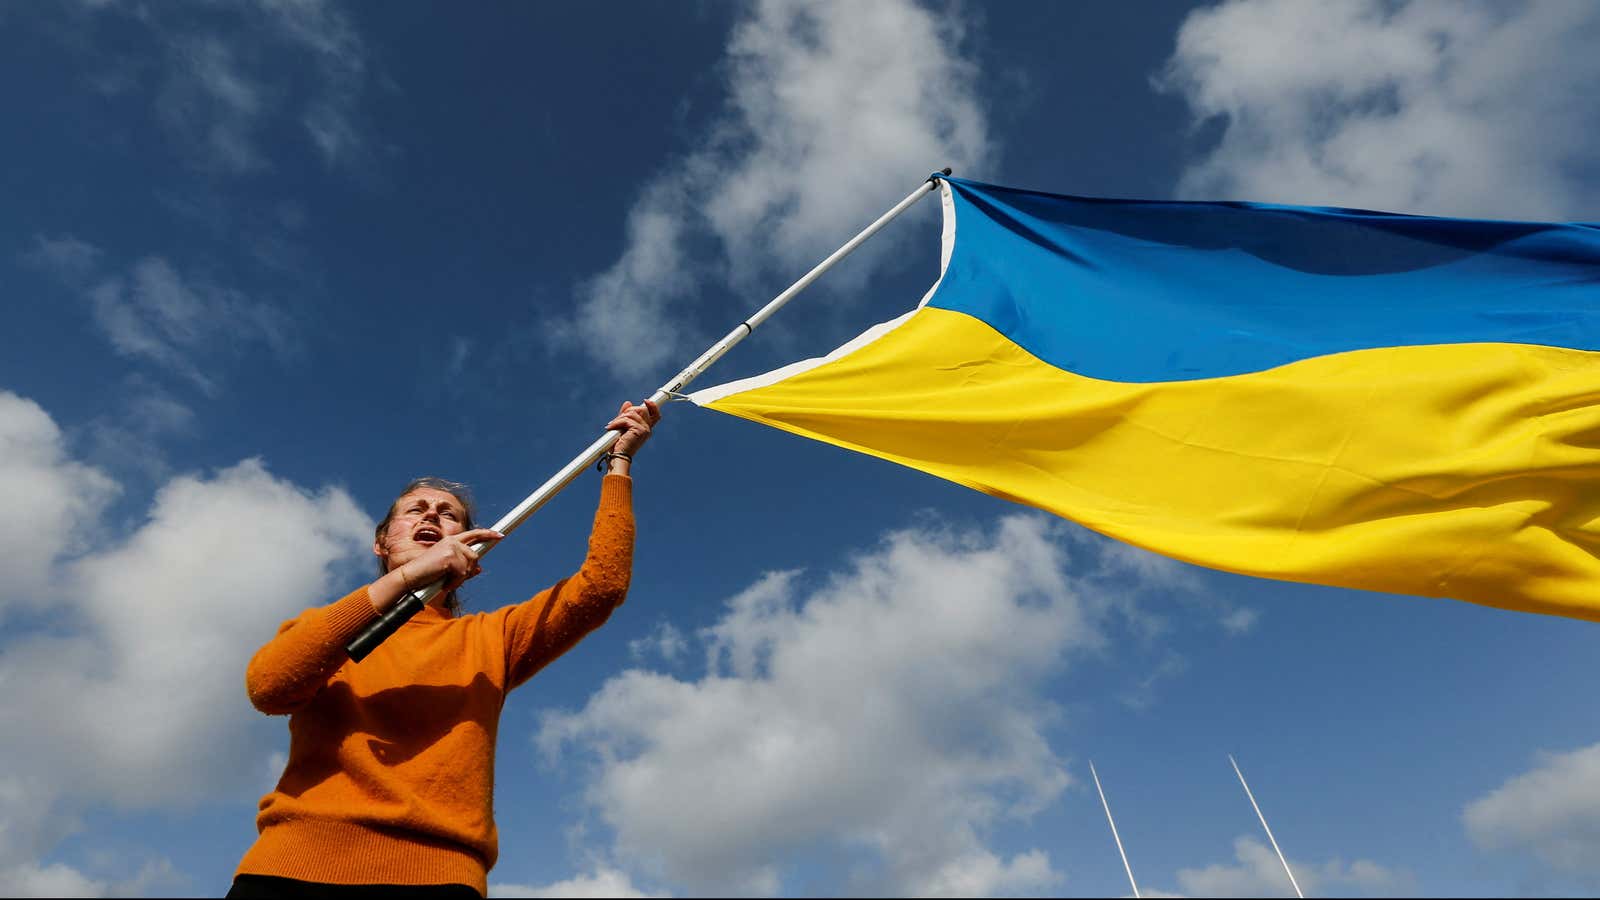 A woman waves a Ukrainian flag against the backdrop of a cloudy sky.